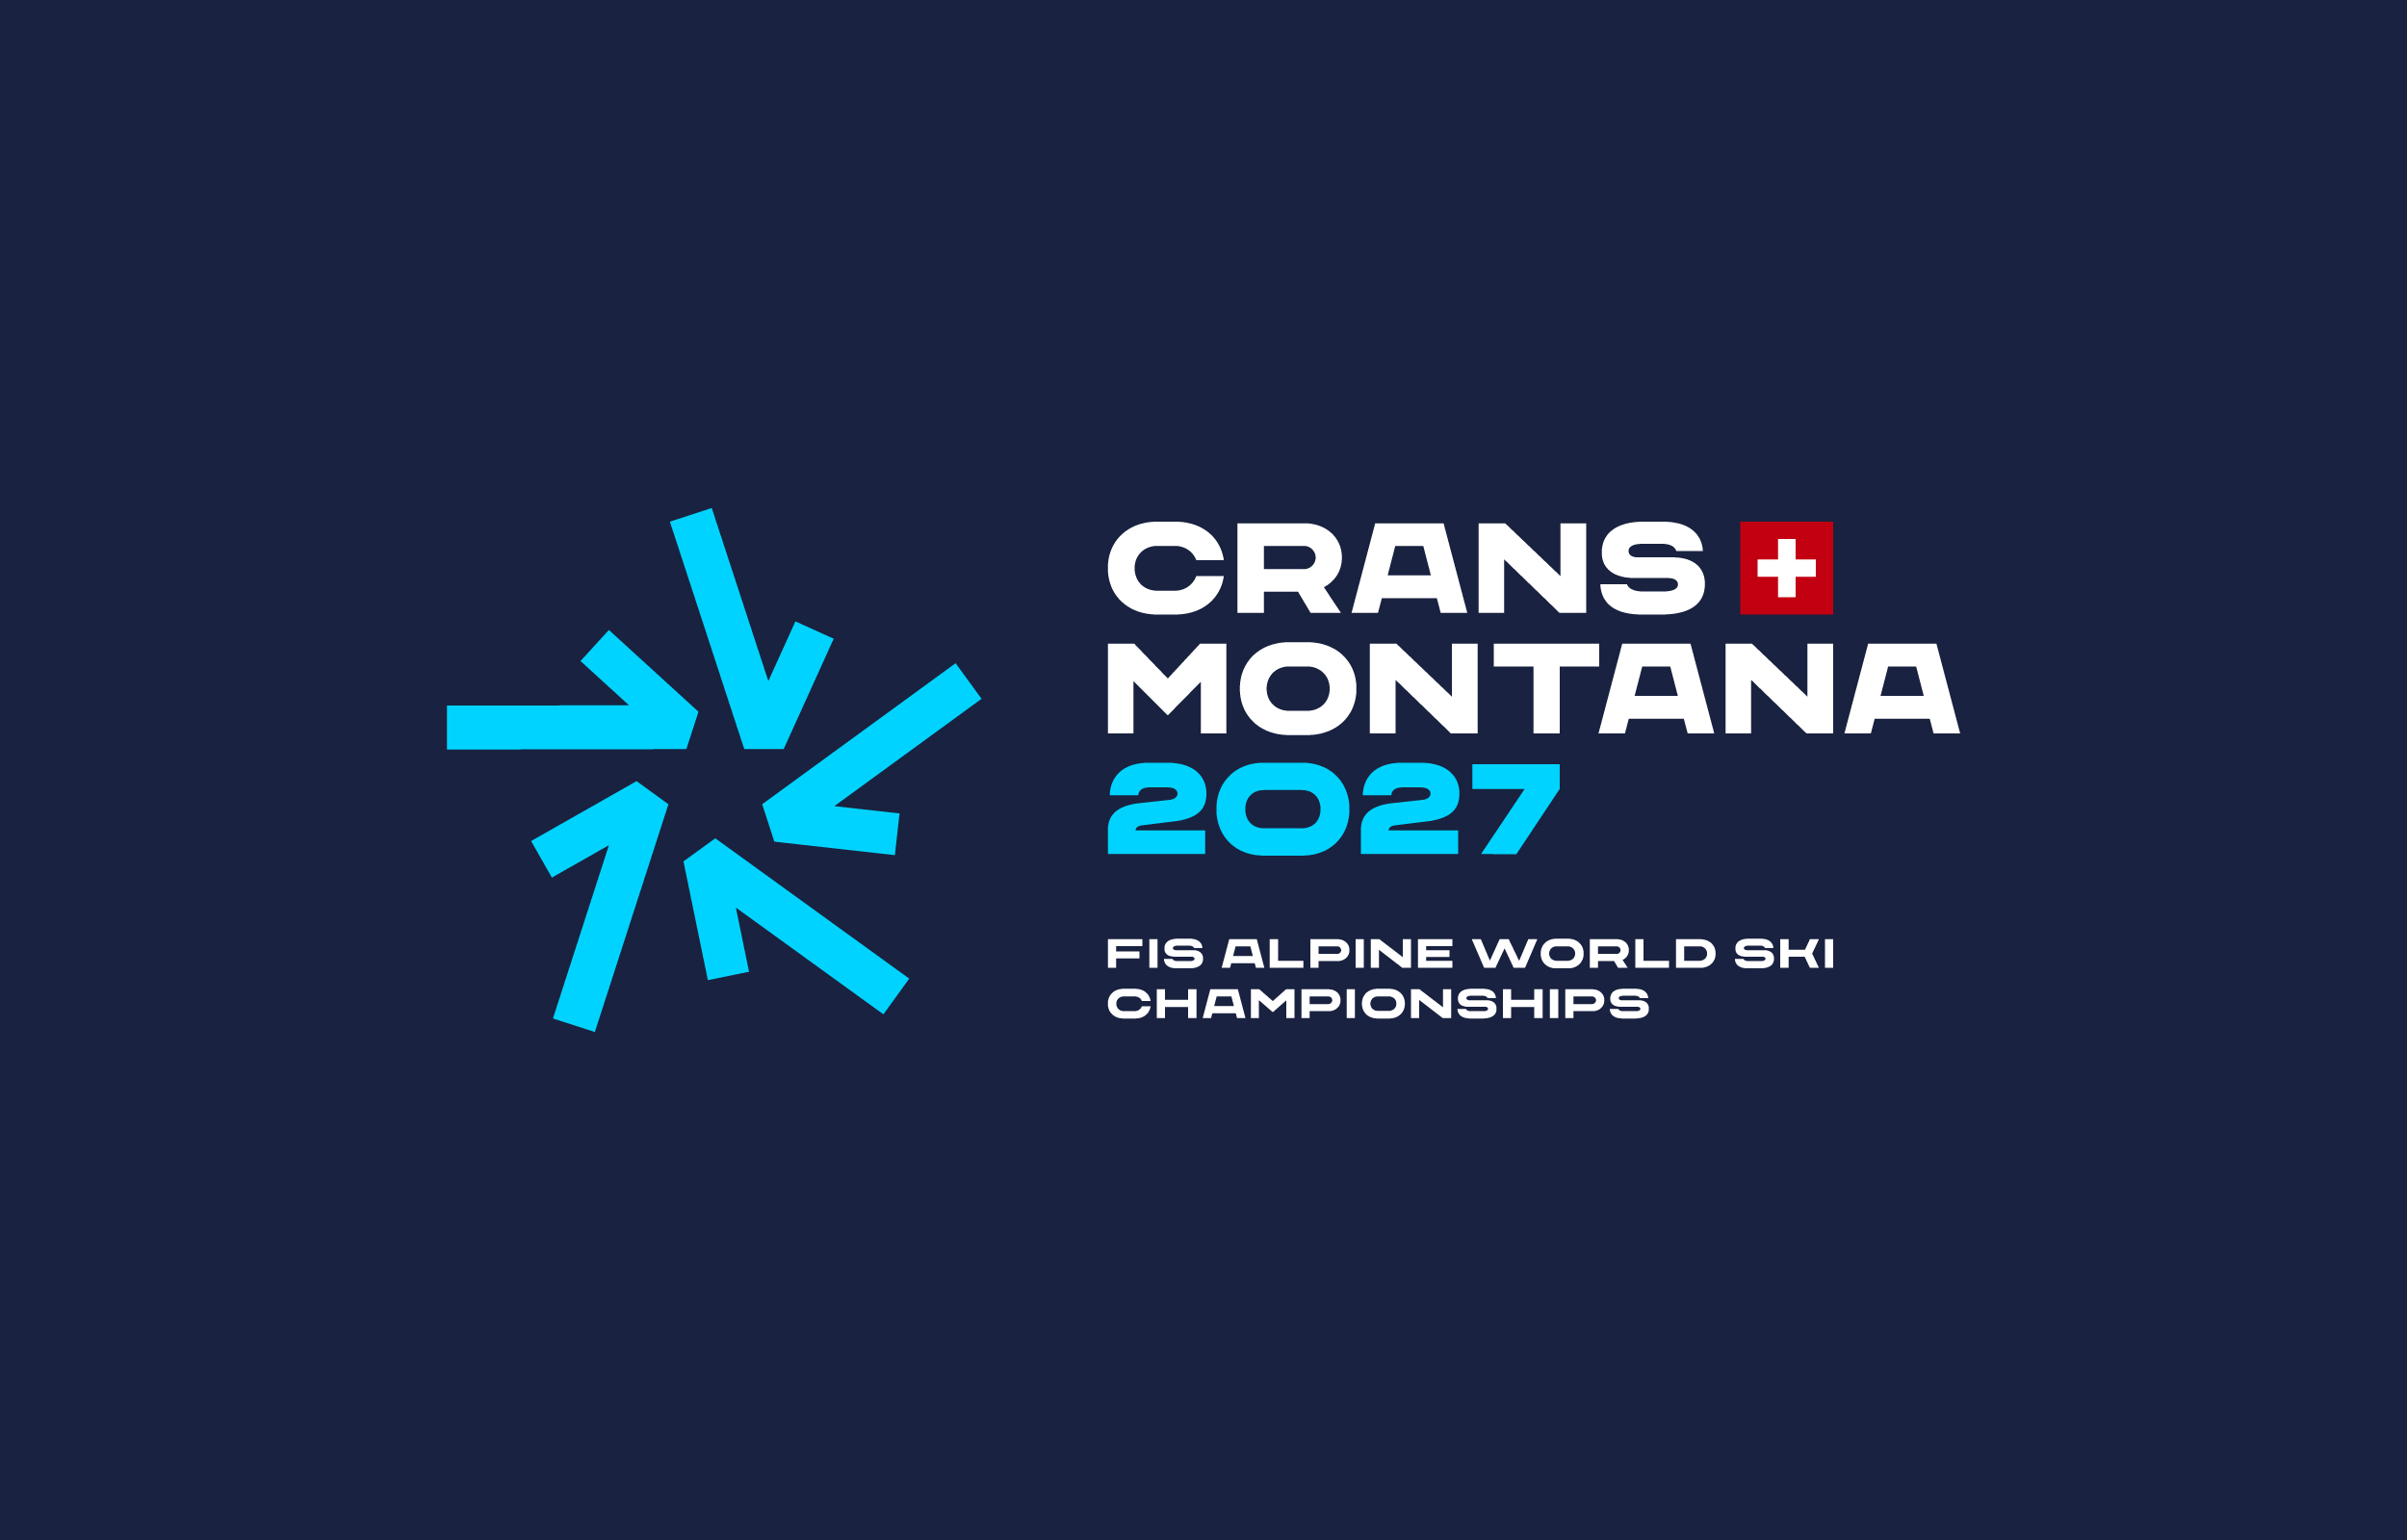 Crans-Montana 2027